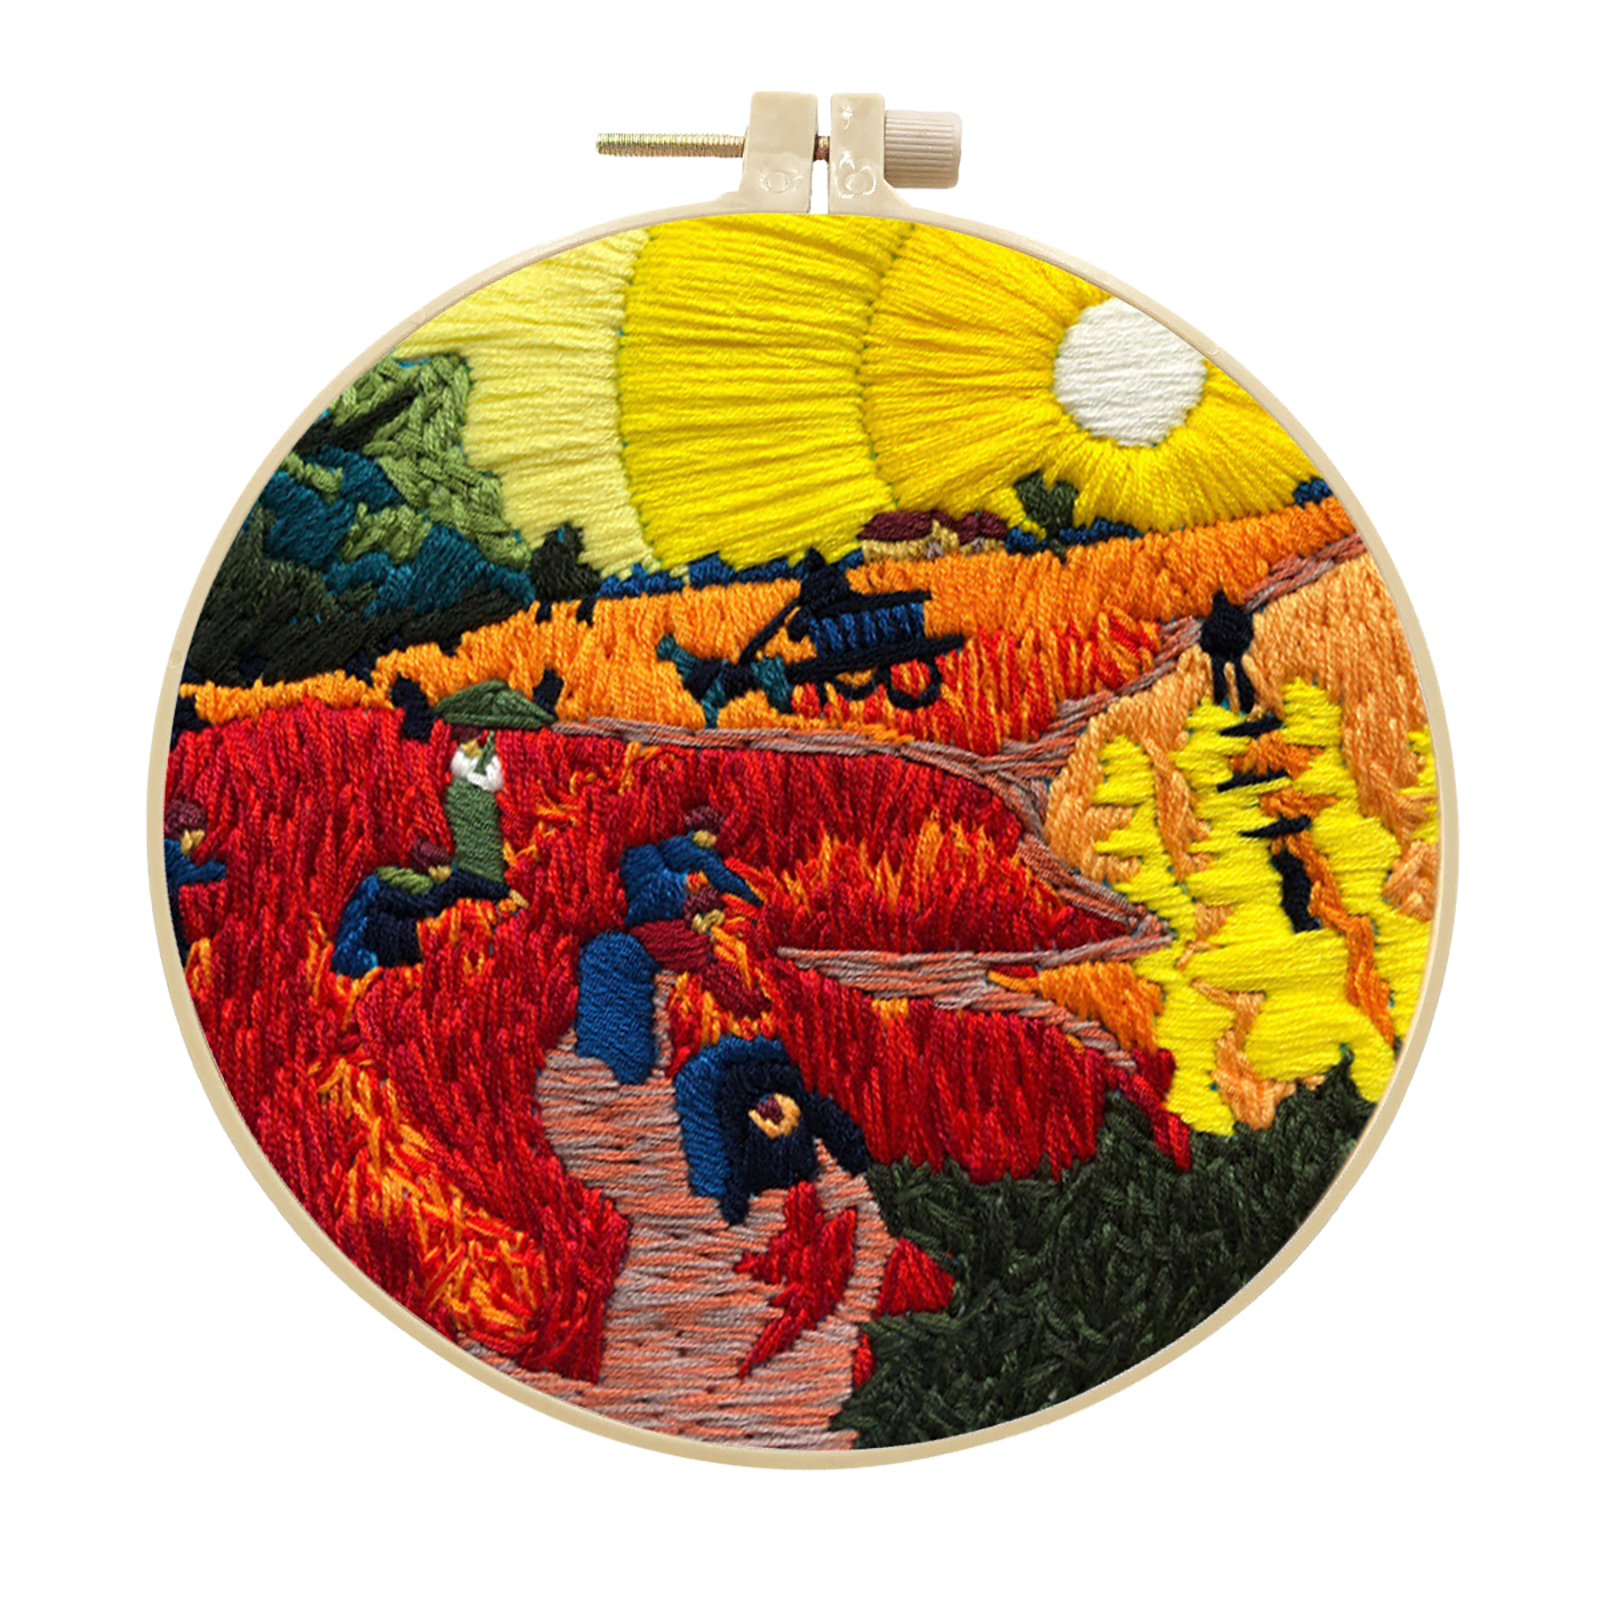 Handmade Embroidery Kit Cross stitch kit for Adult Beginner - Van Gogh The Red Vineyard Pattern